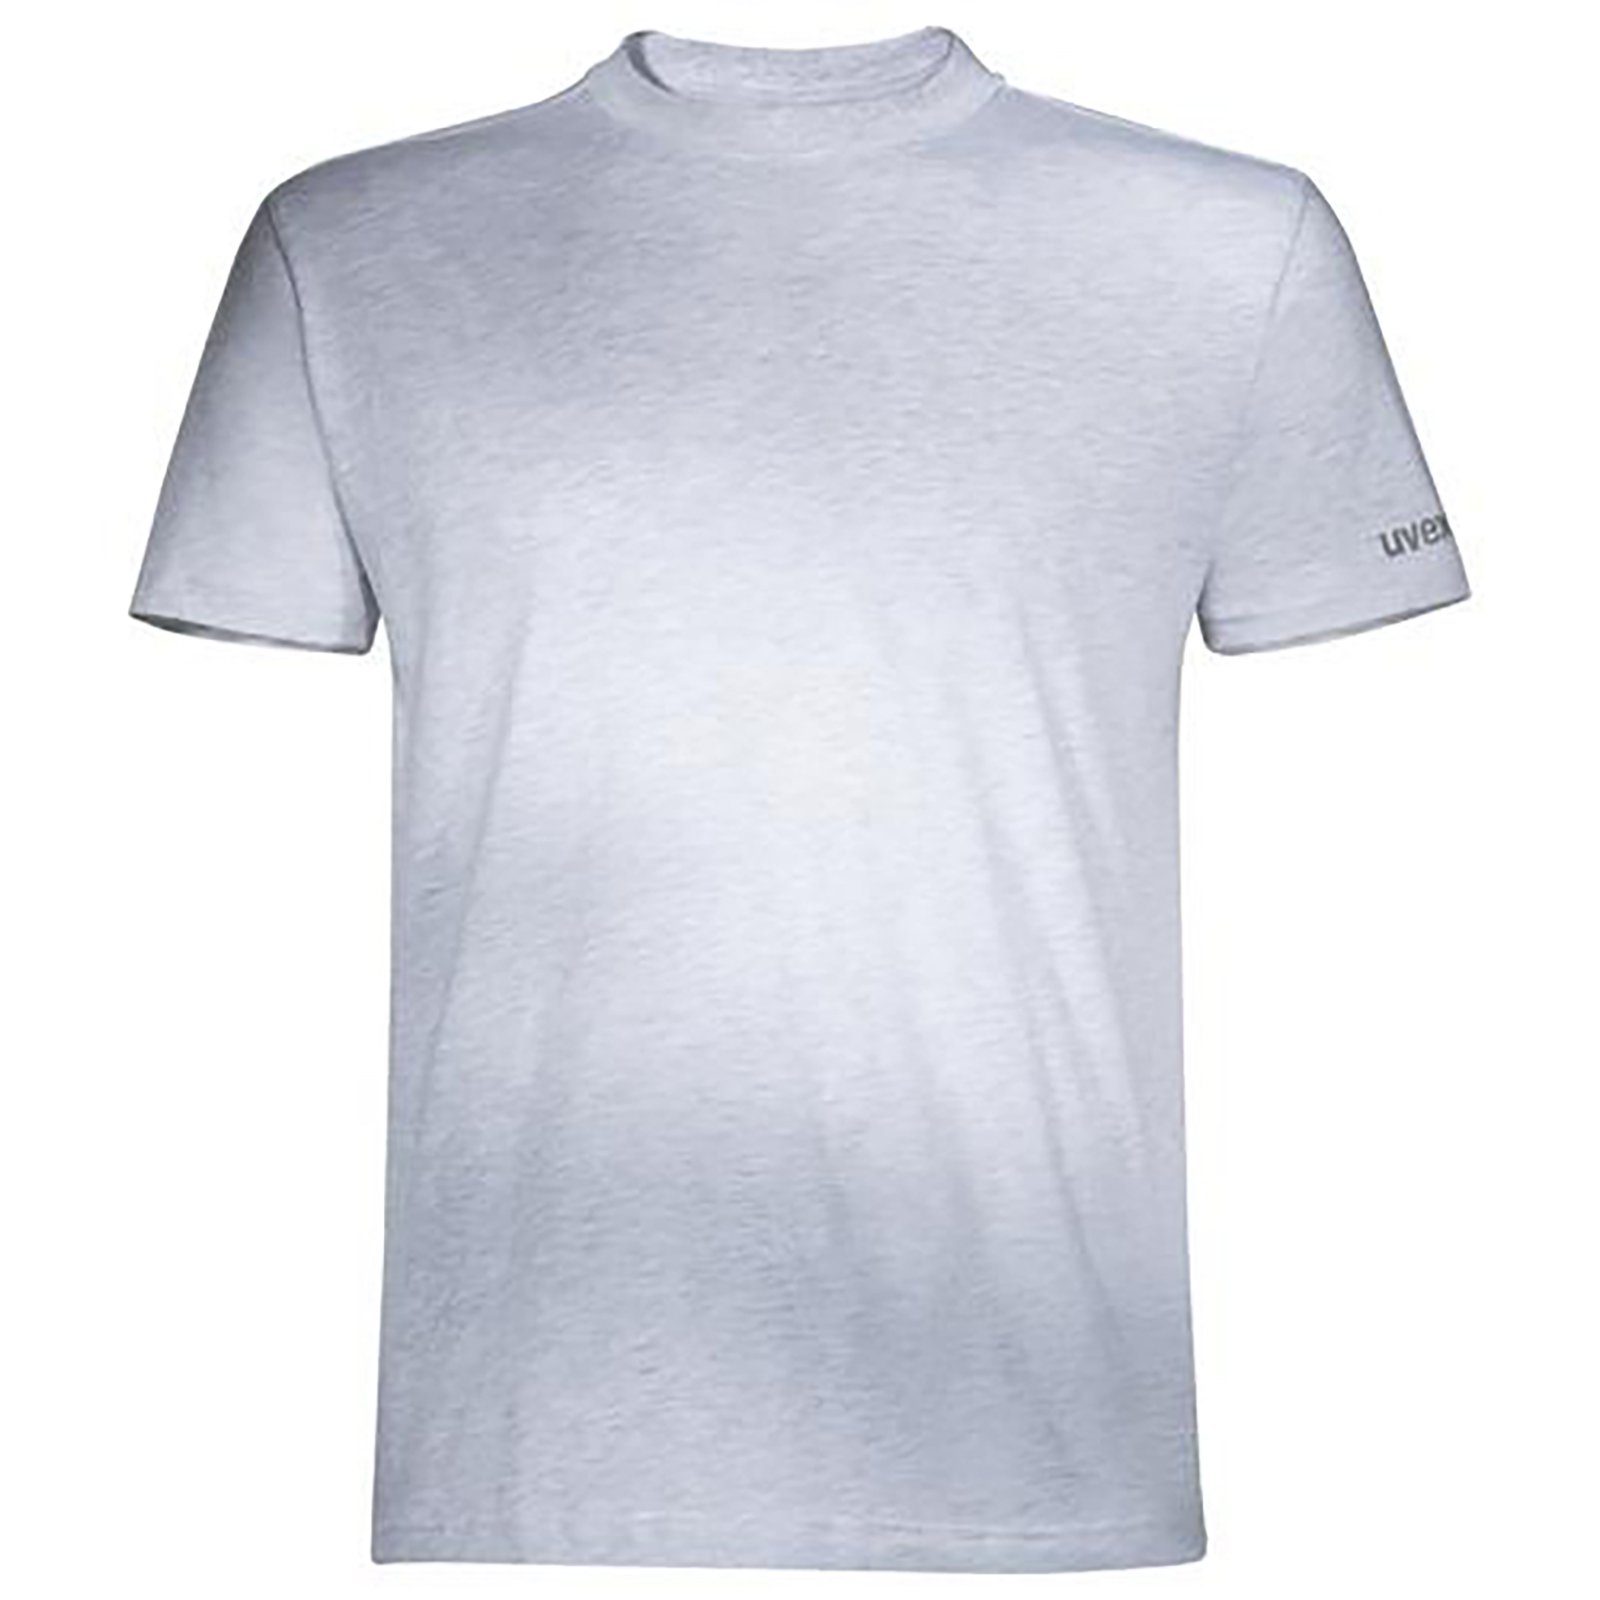 Uvex T-Shirt T-Shirt grau, ash-melange